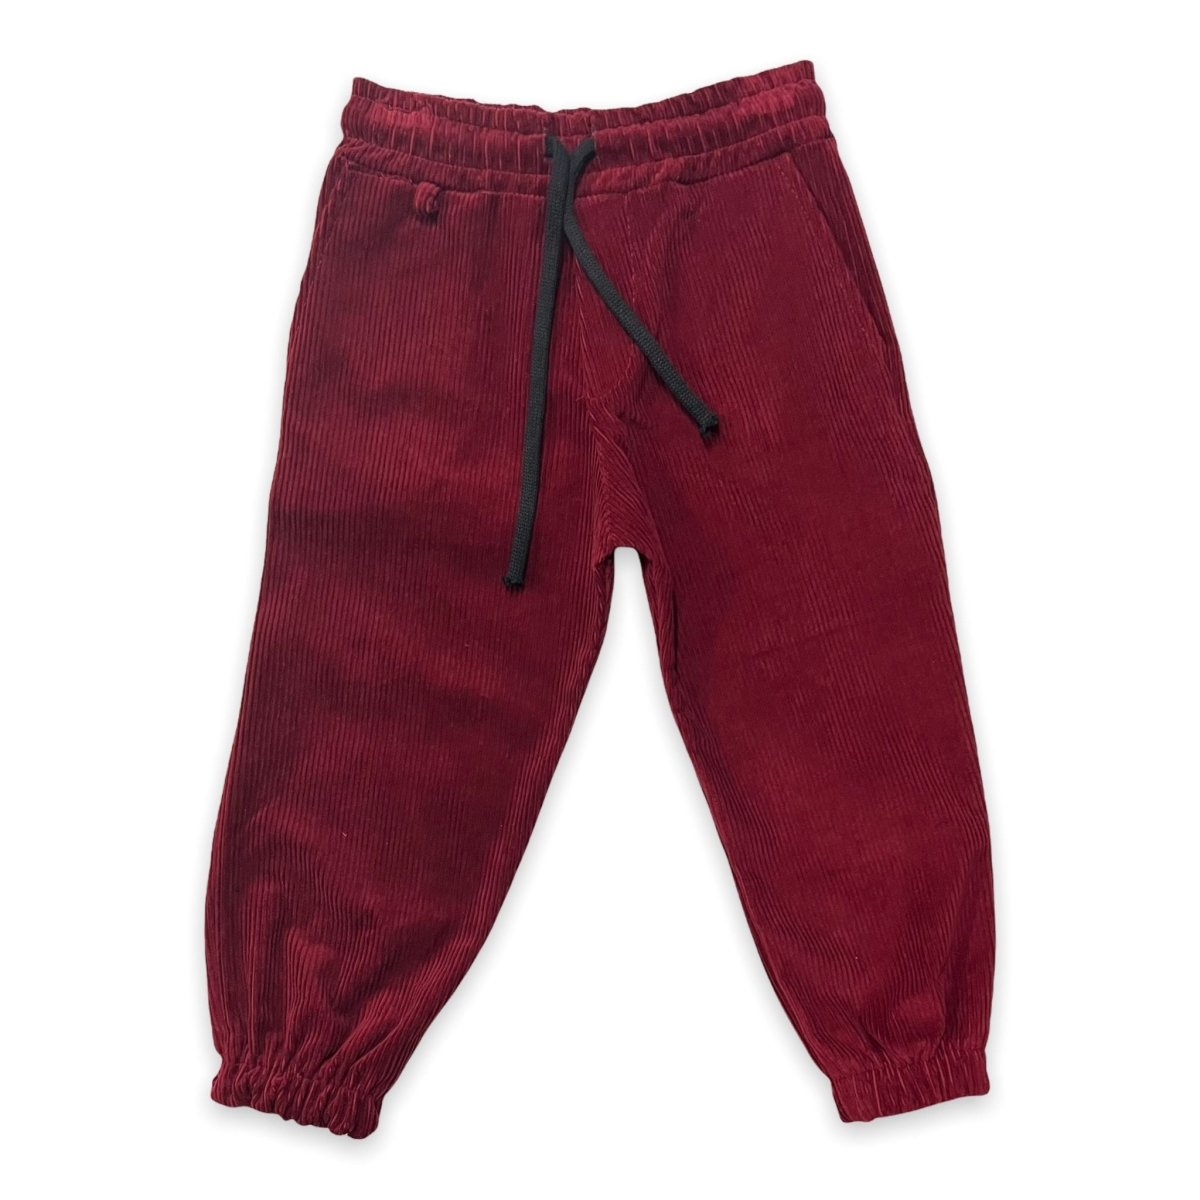 Pantalone in Velluto - Mstore016 - Pantalone in velluto - Granada